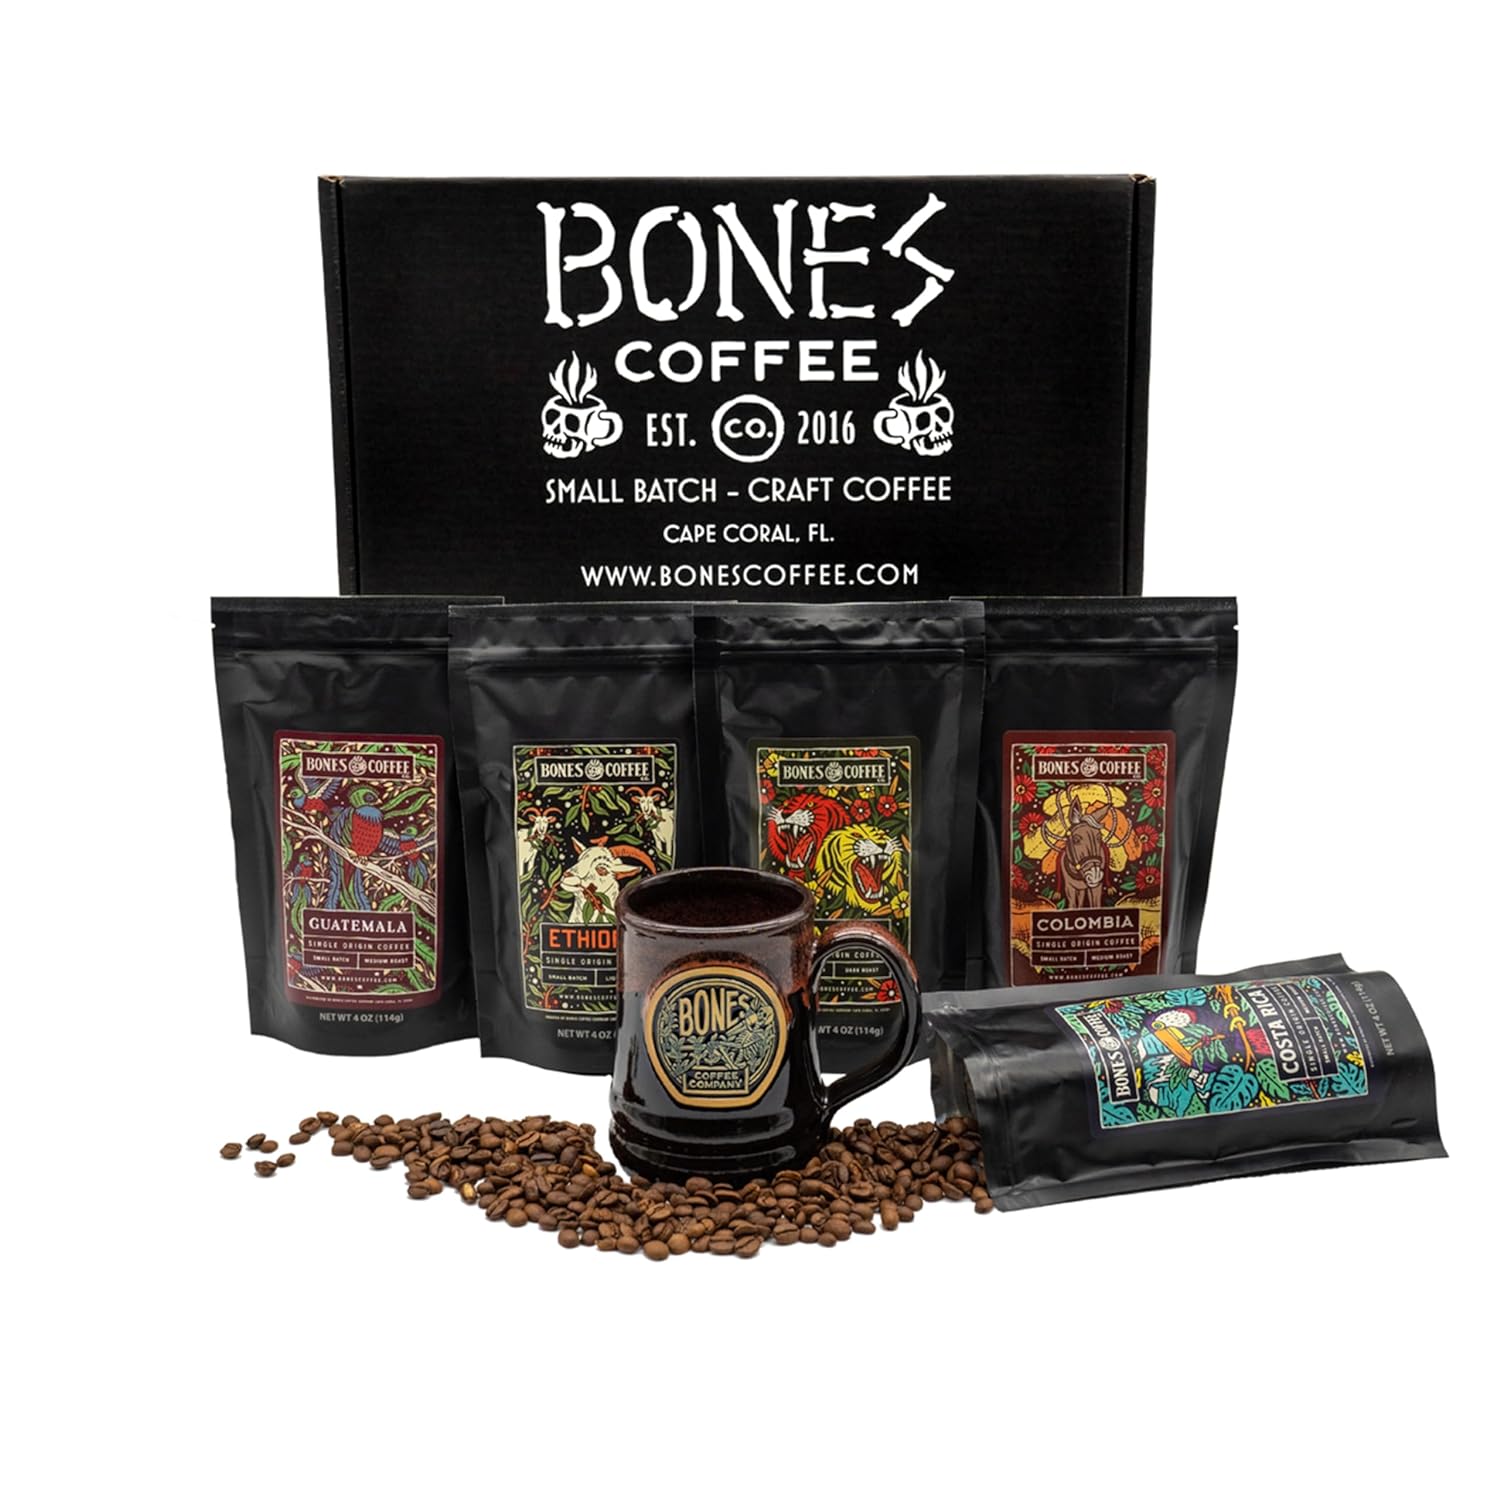 Bones Coffee Company NEW World Tour Bundle Ground Coffee Beans | Gift Box Set With Specialty Coffee Mug | 4 oz Pack of 5 Assorted Single-Origin Medium Roast Coffee Beverages (Ground)